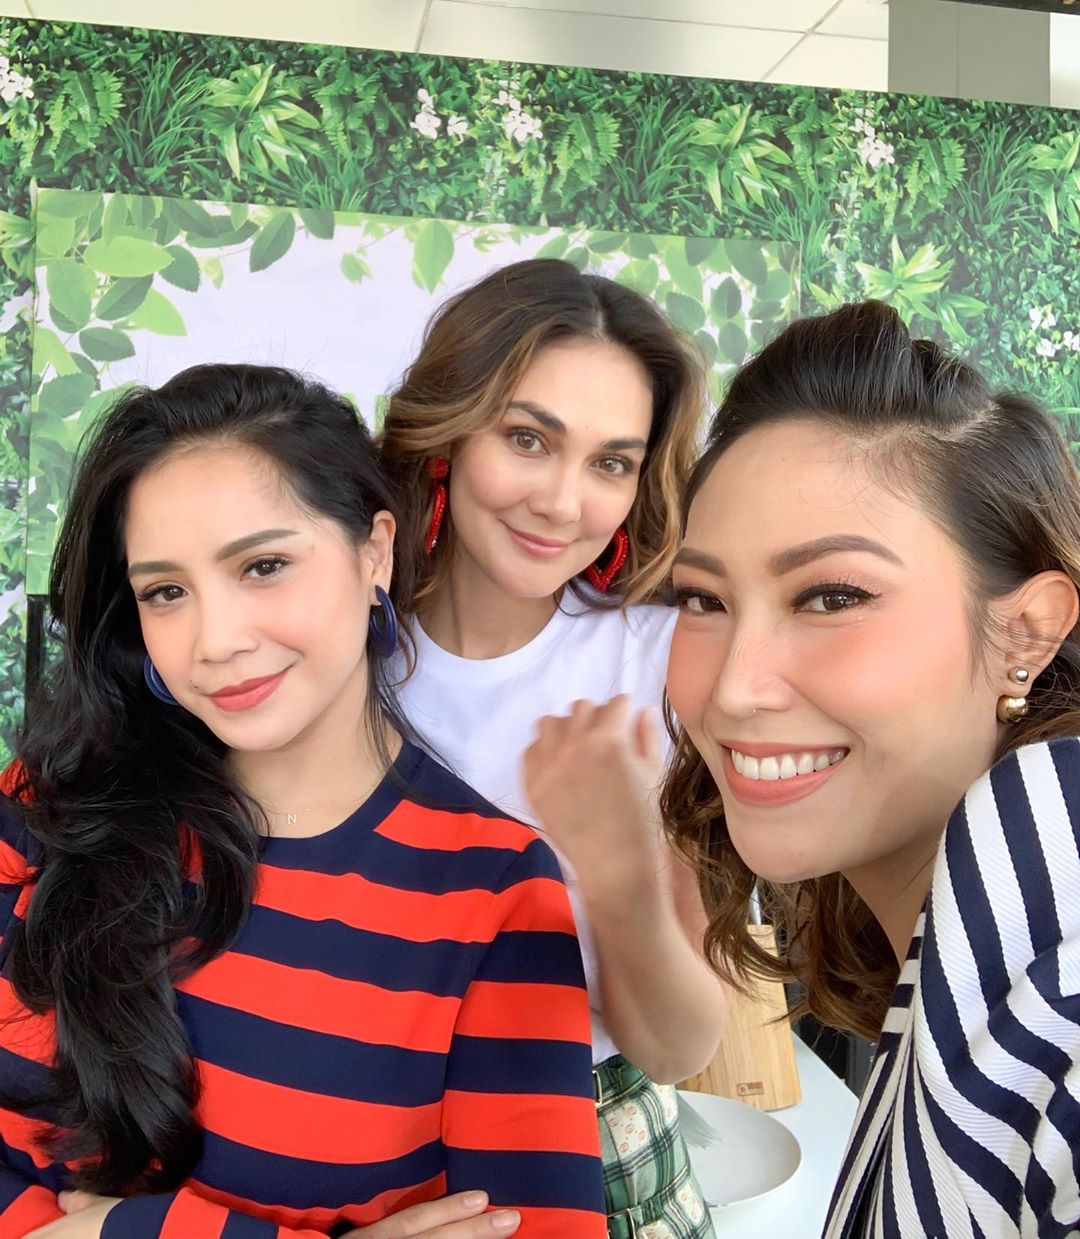 Nagita Slavina, Luna Maya, dan Ayu Dewi Dilabeli 'Wanita Berkelas'